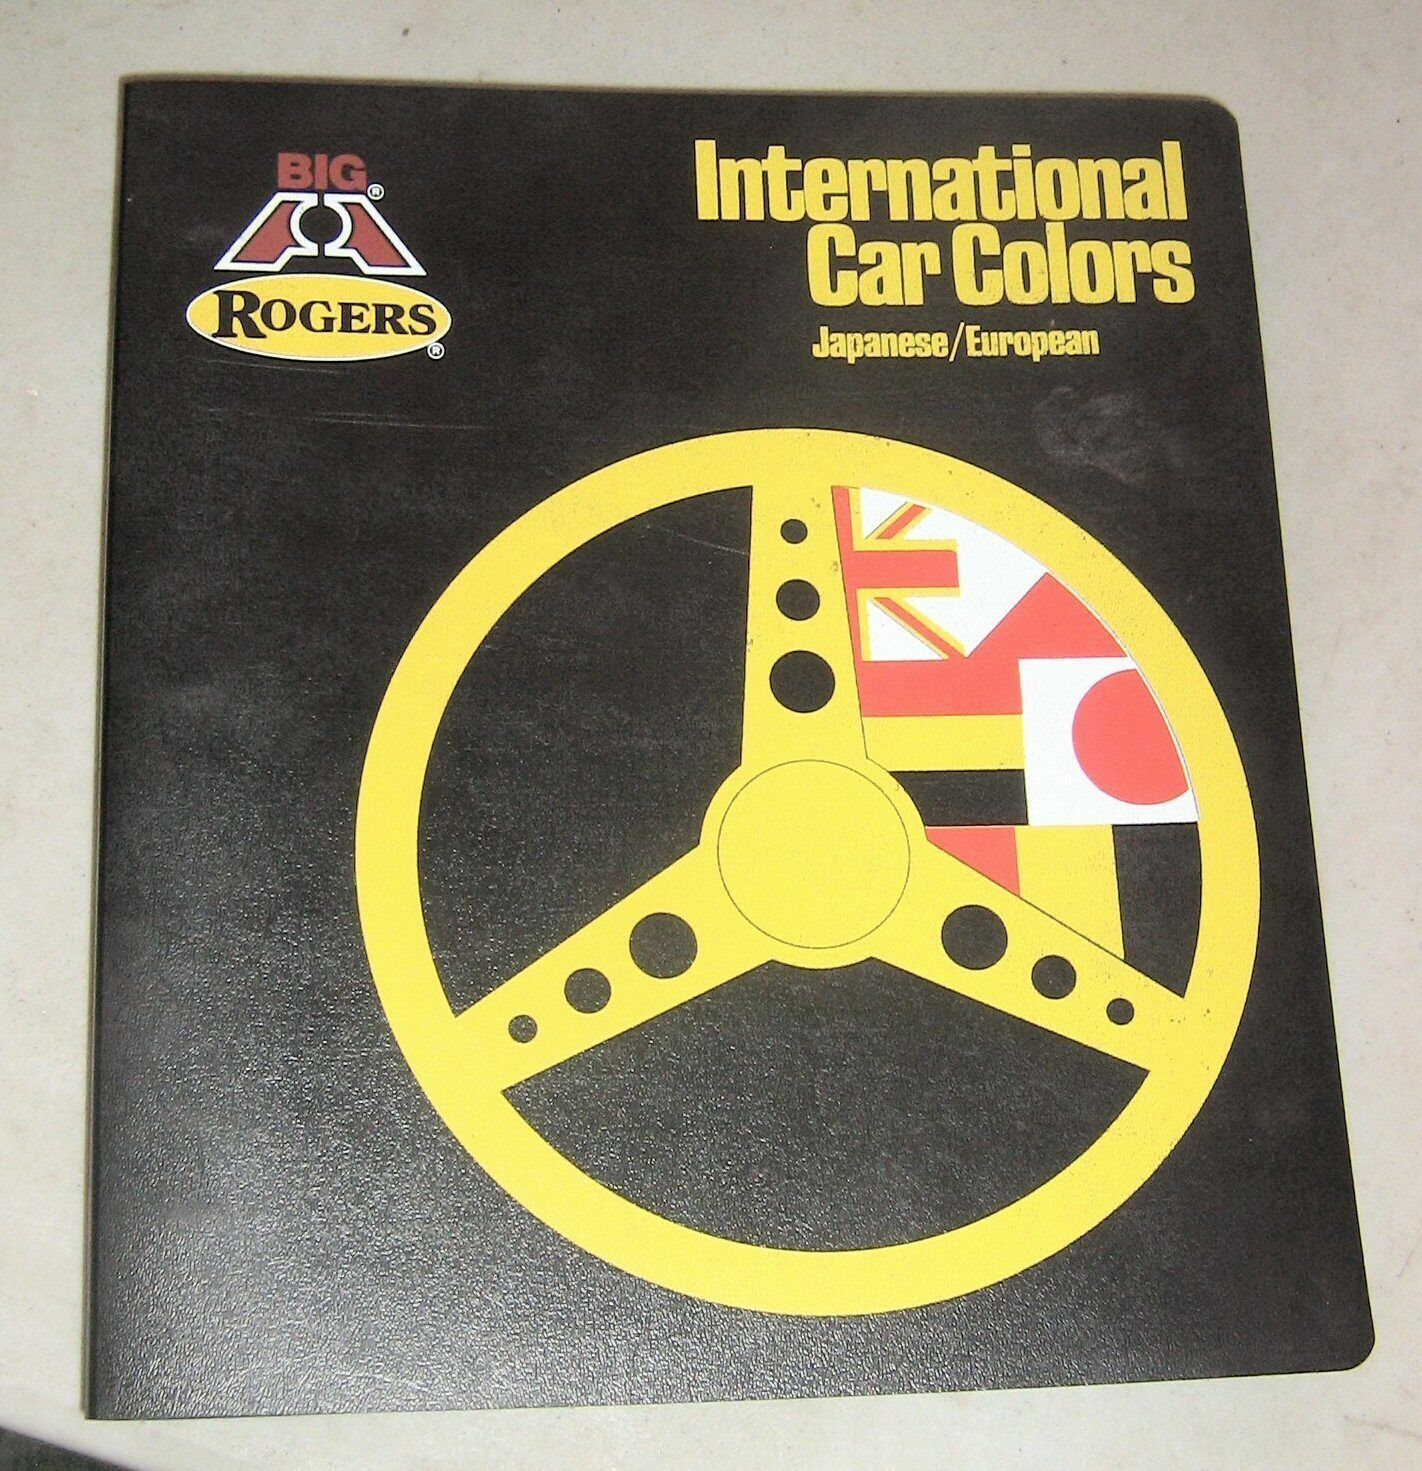 Big A,Rogers,International Car Colors,Japanese,European Imports,1979-1985